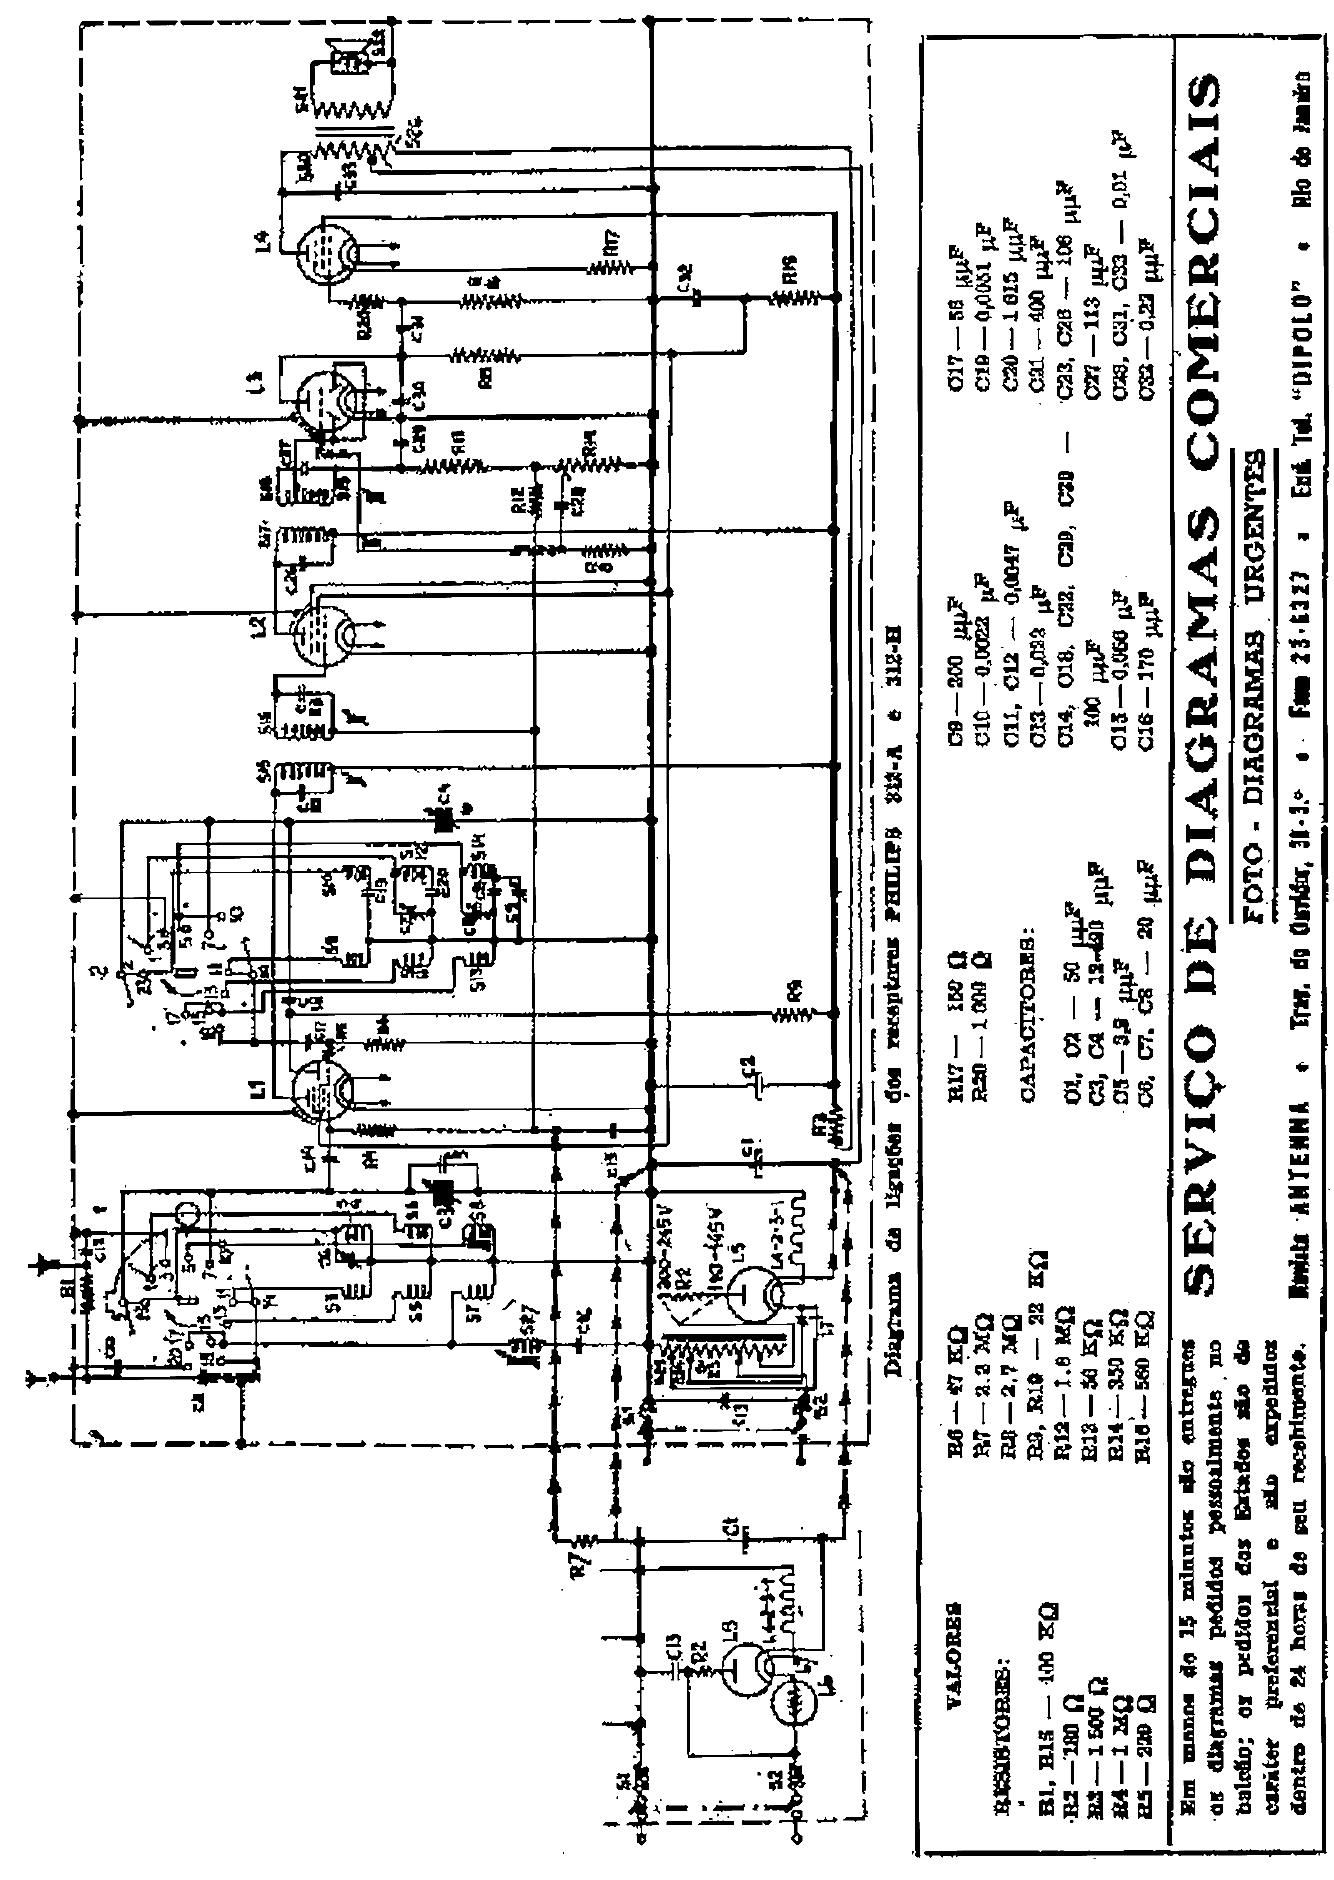 philips 312 a schematic